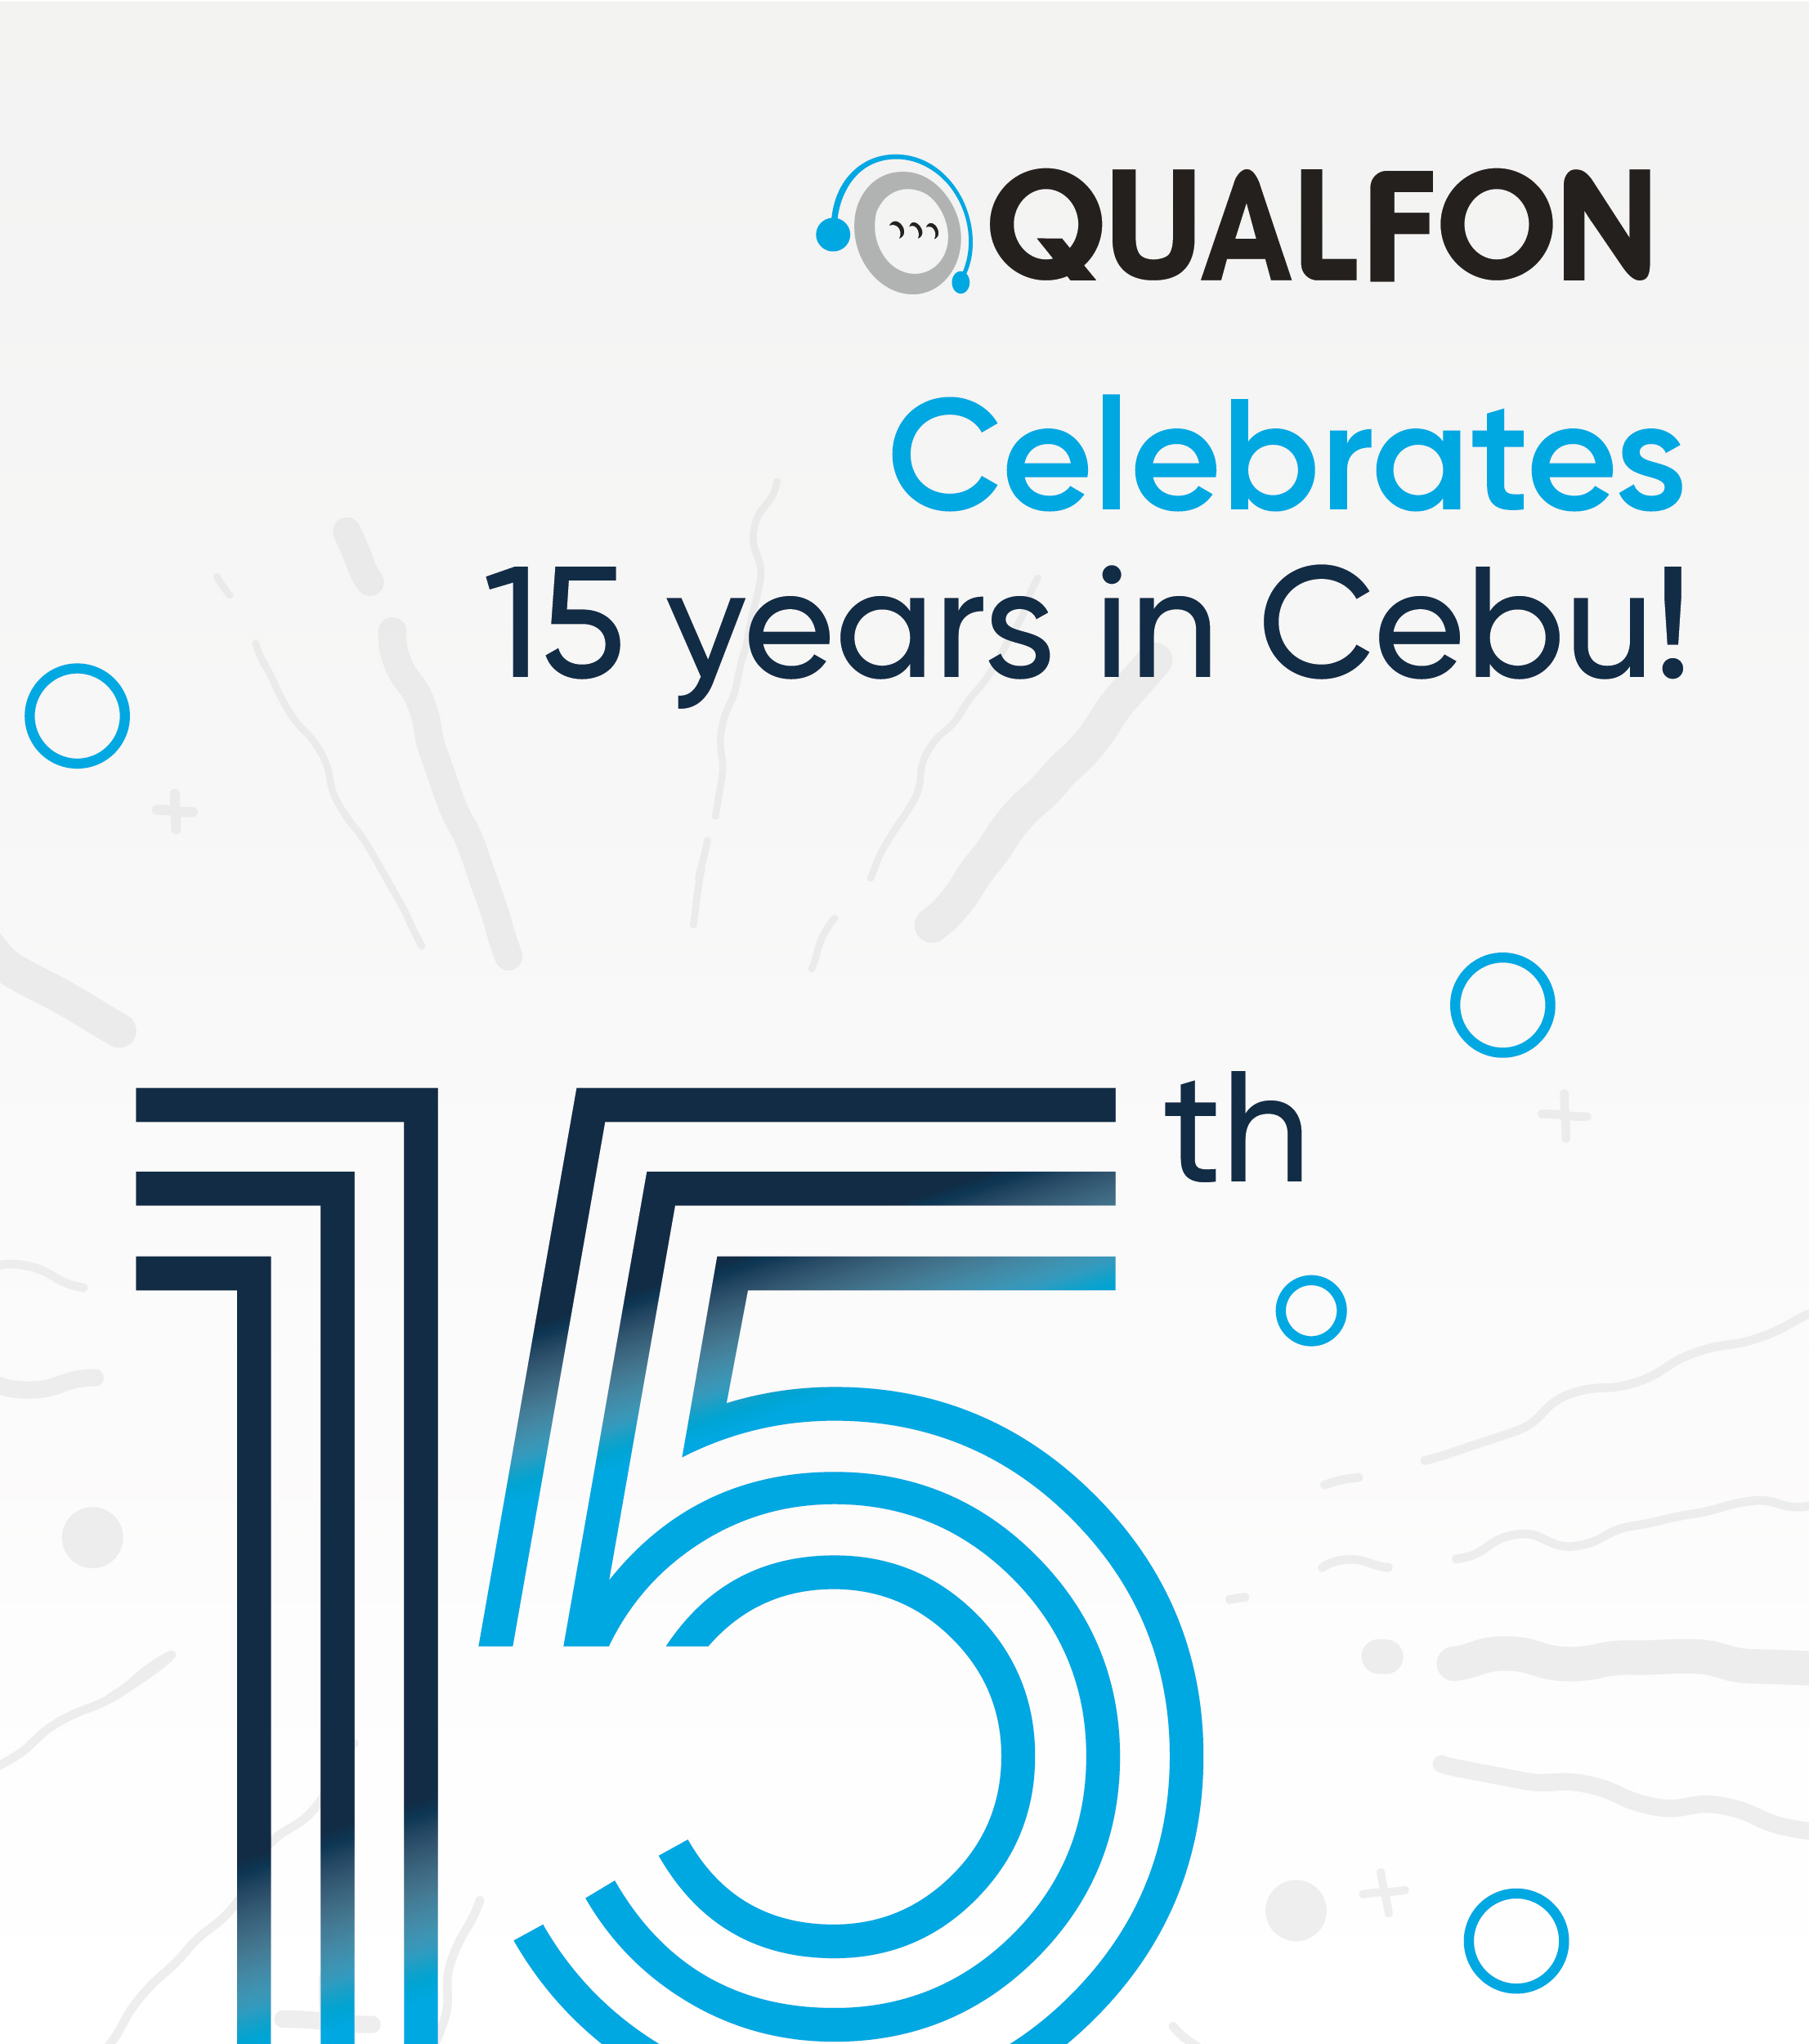 Qualfon’s Cebu location celebrates 15 years of service